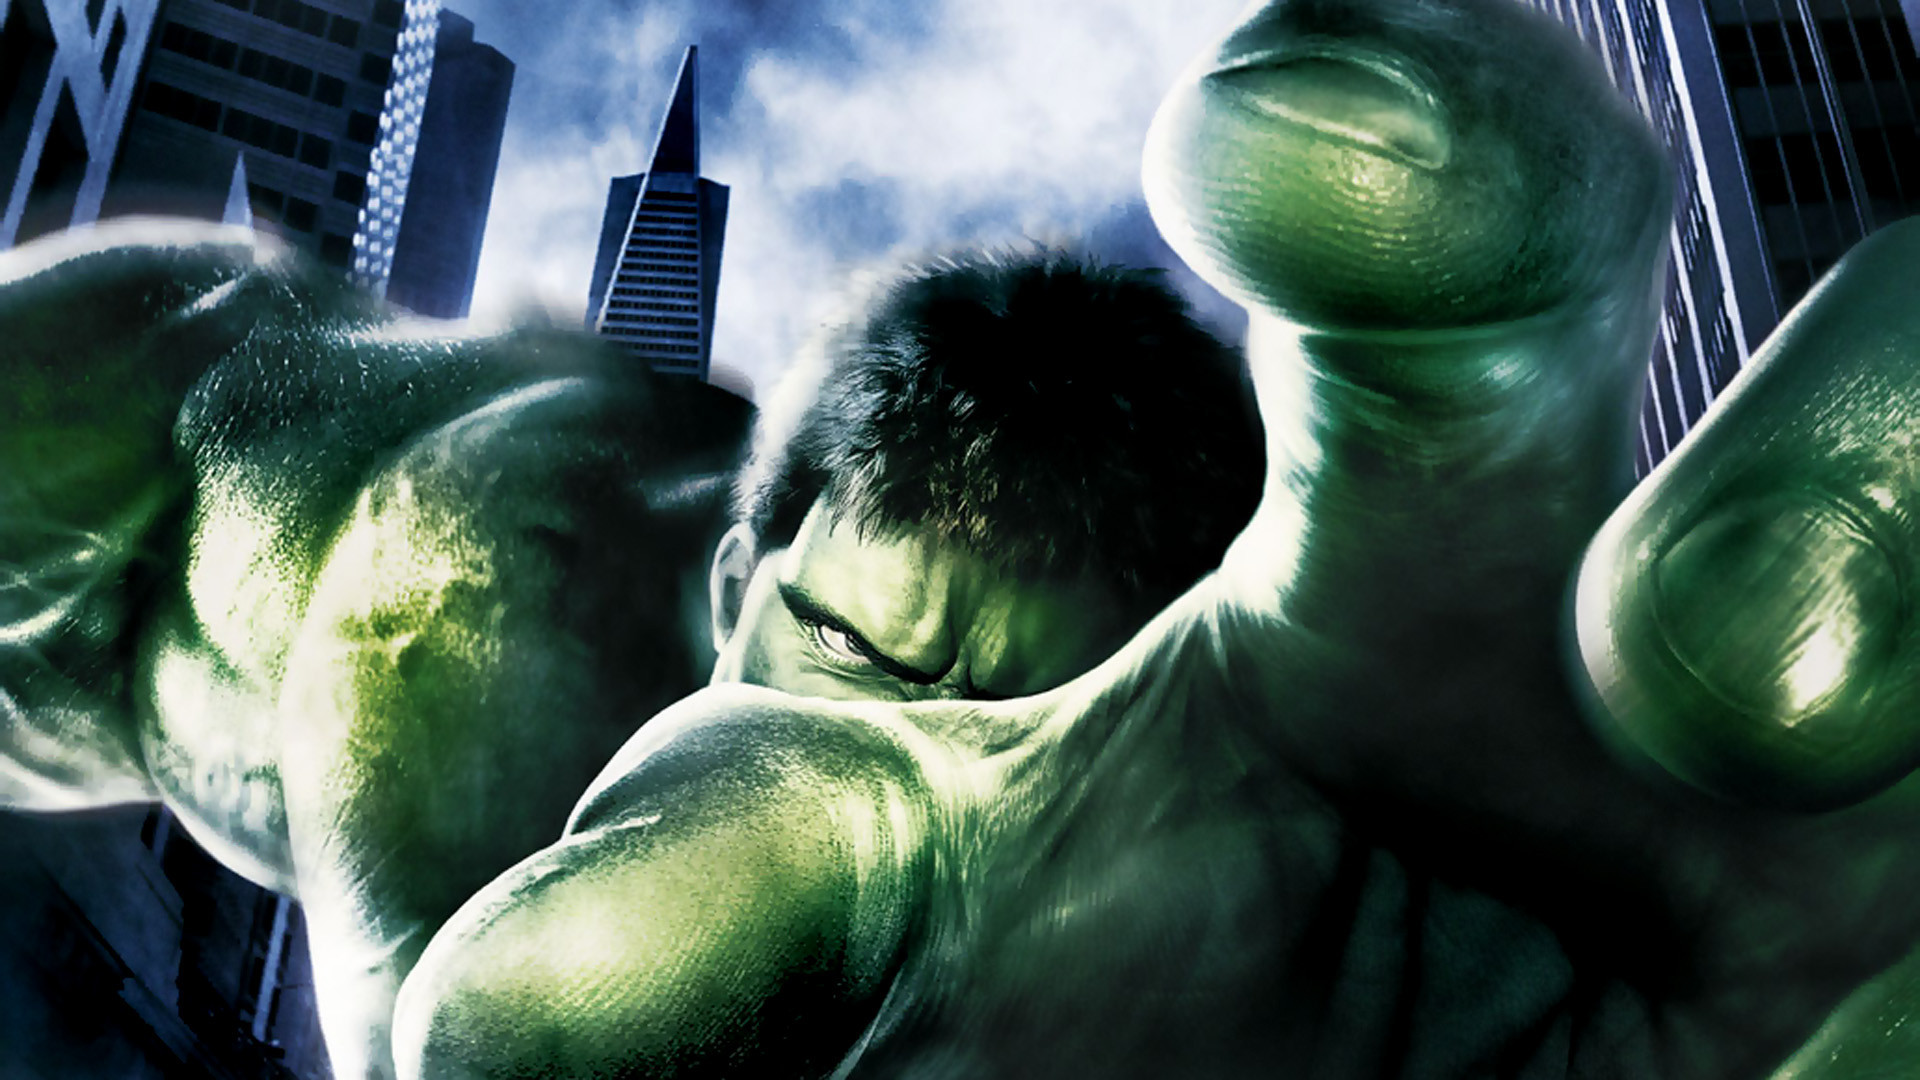 Free download hulk HD image pictures.